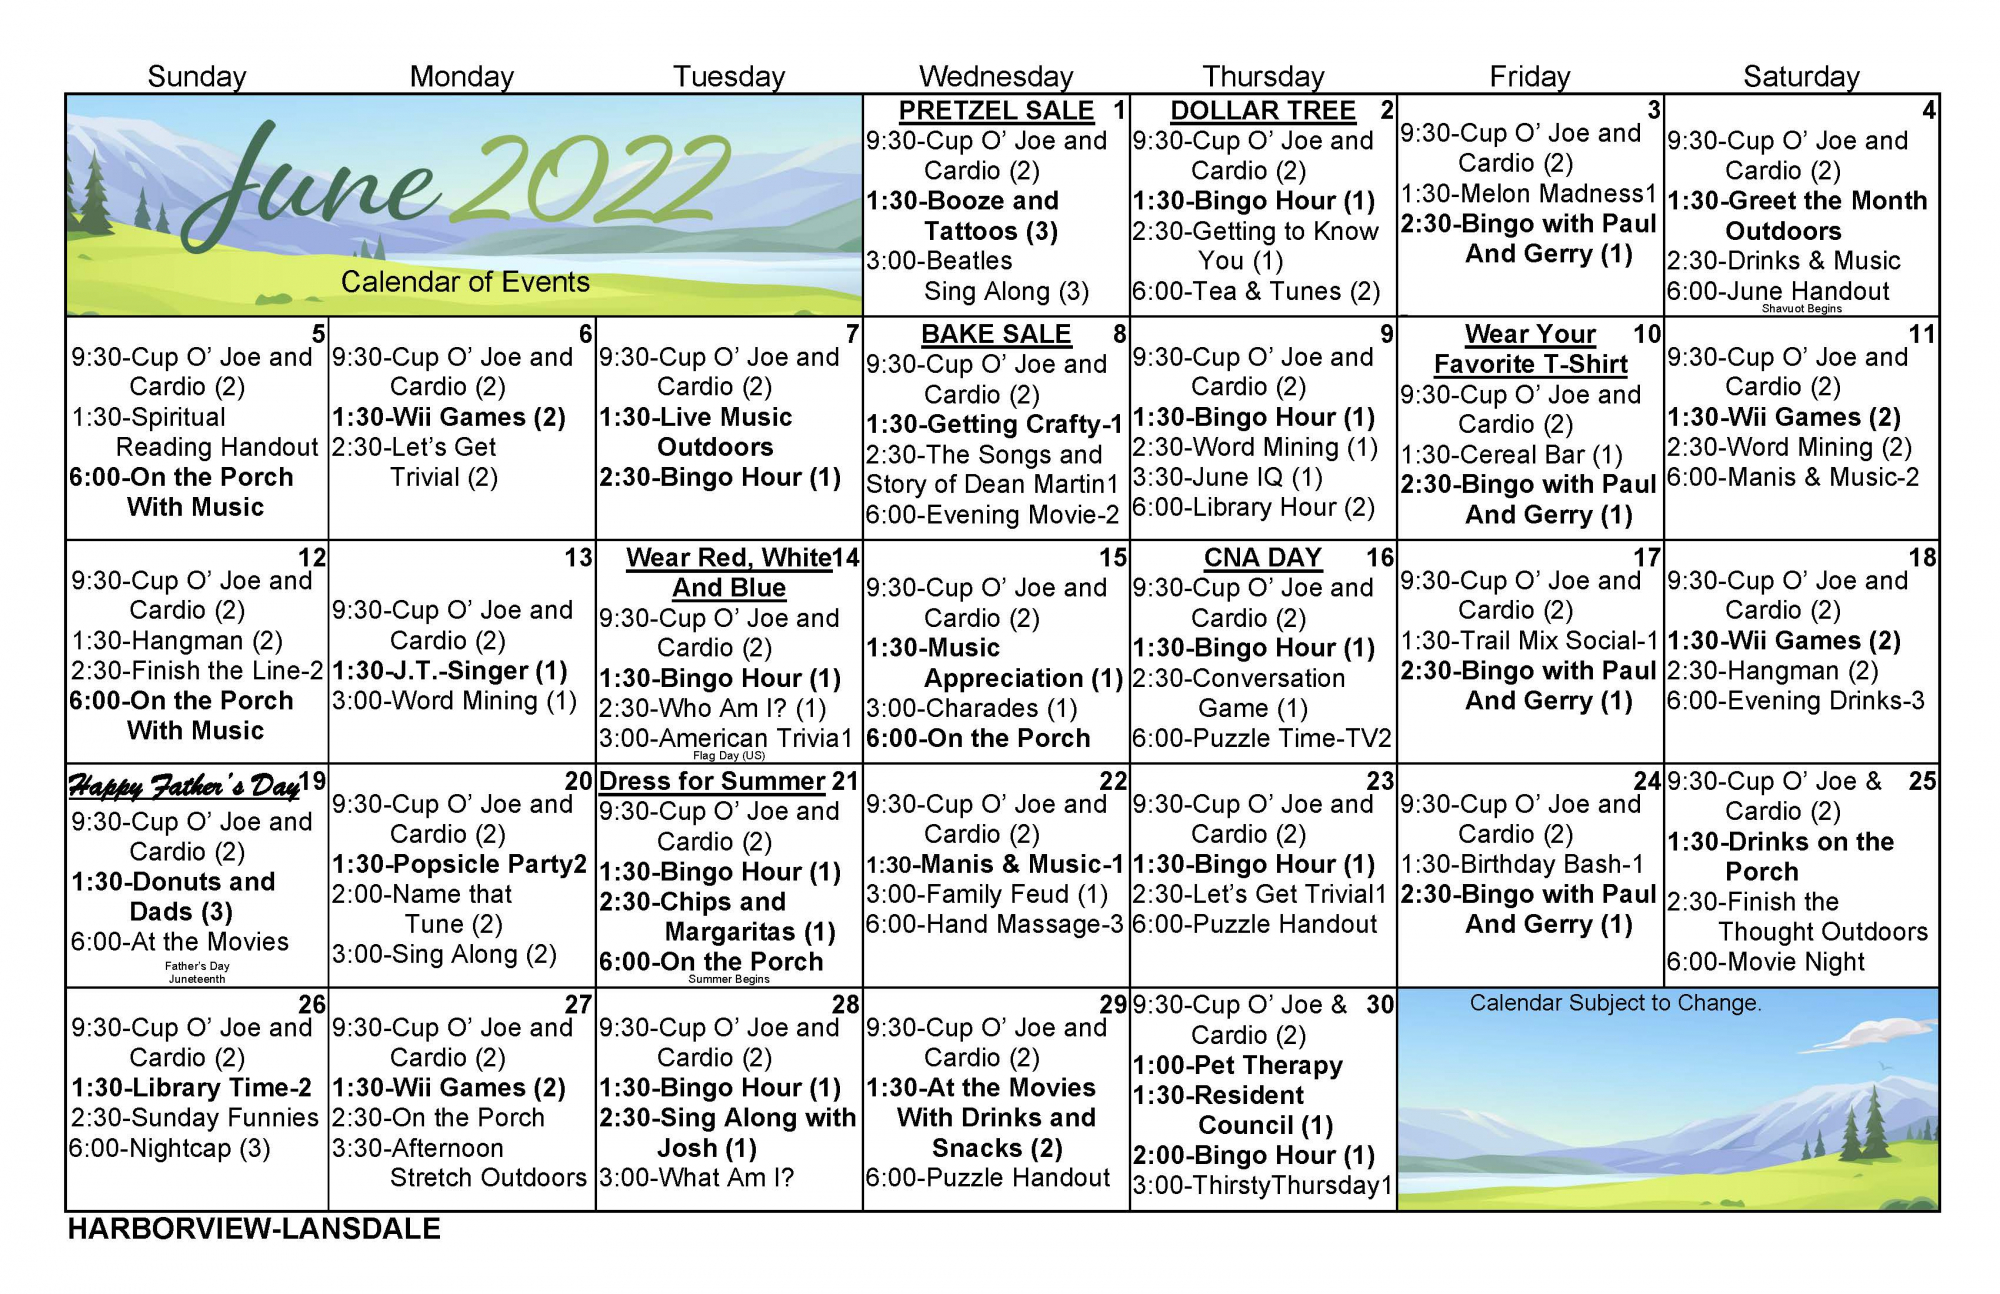 Harborview Lansdale June 2022 Calendar